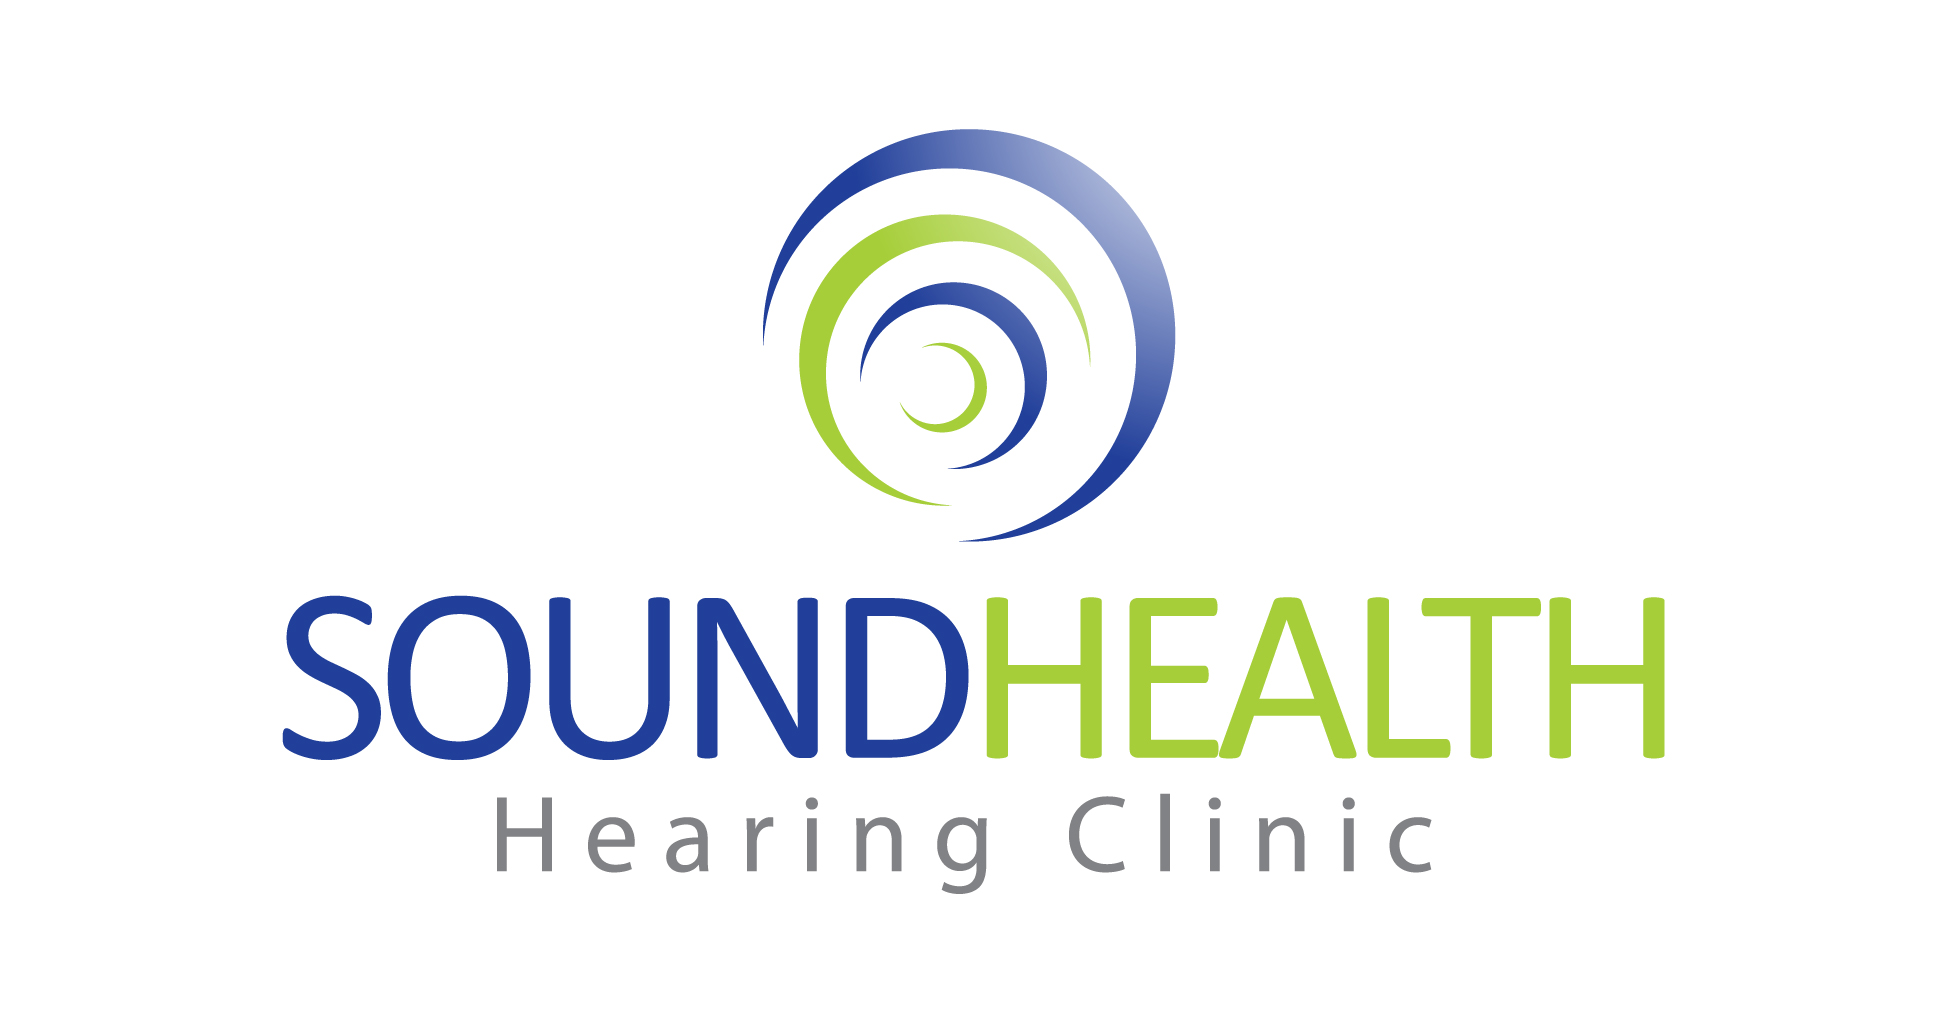 SOUNDHEALTH Hearing Clinic